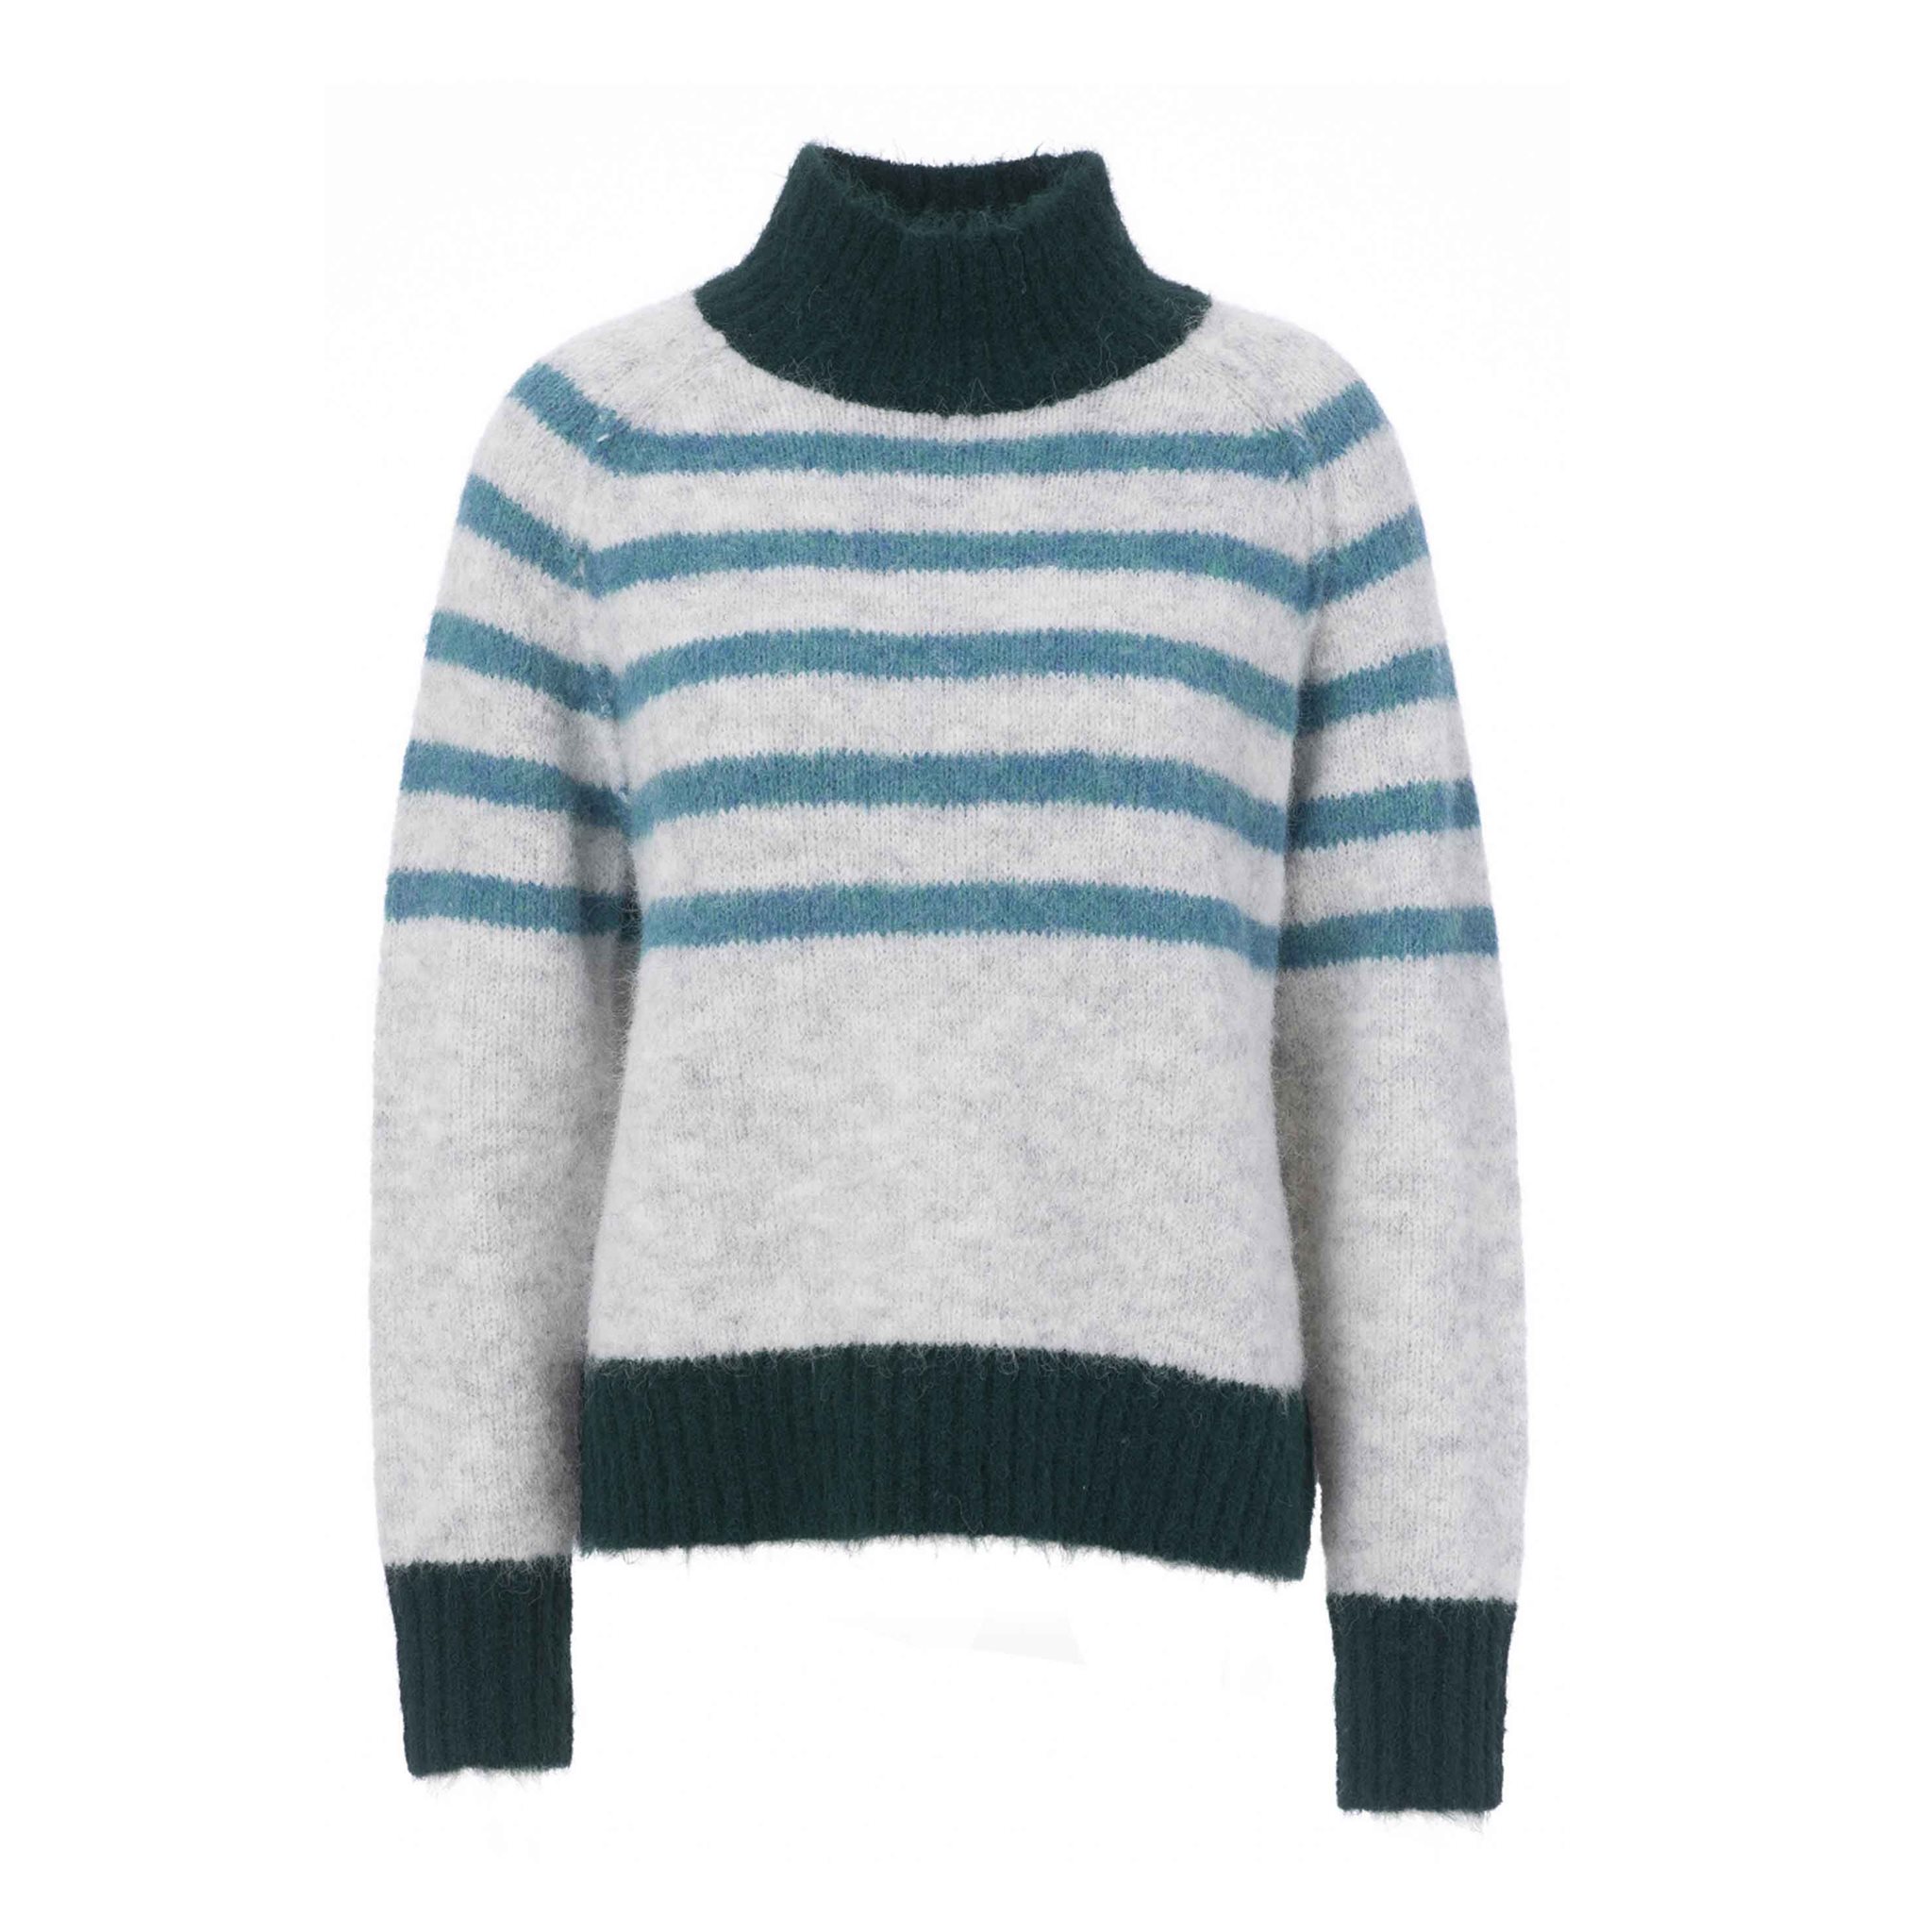 Benedicte sweater Jc SOPHIE